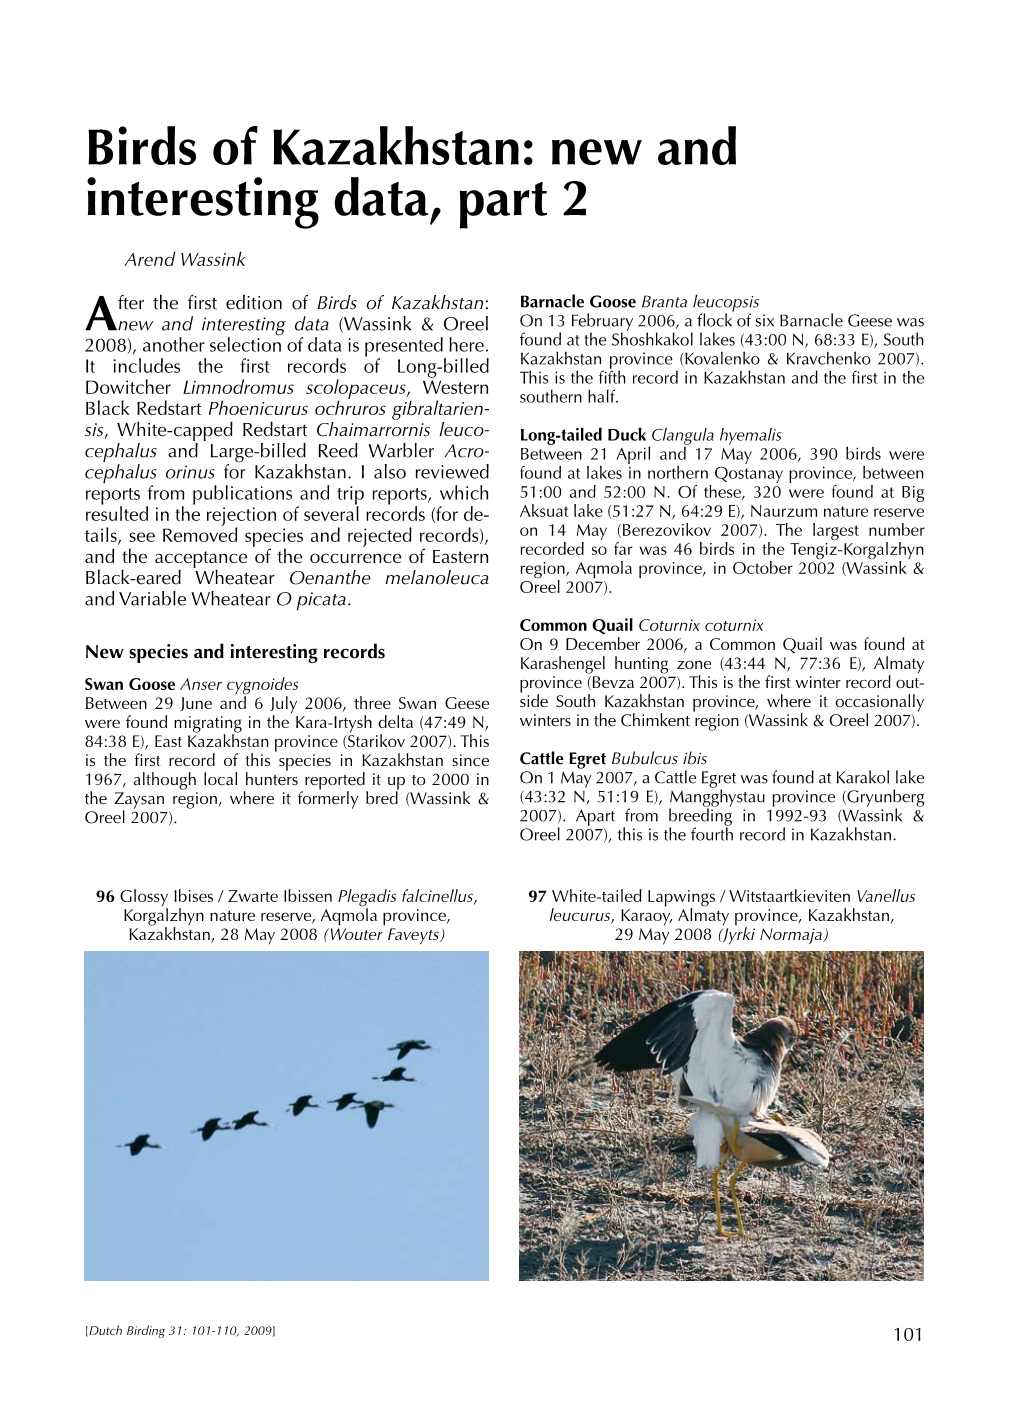 Birds of Kazakhstan: New and Interesting Data, Part 2